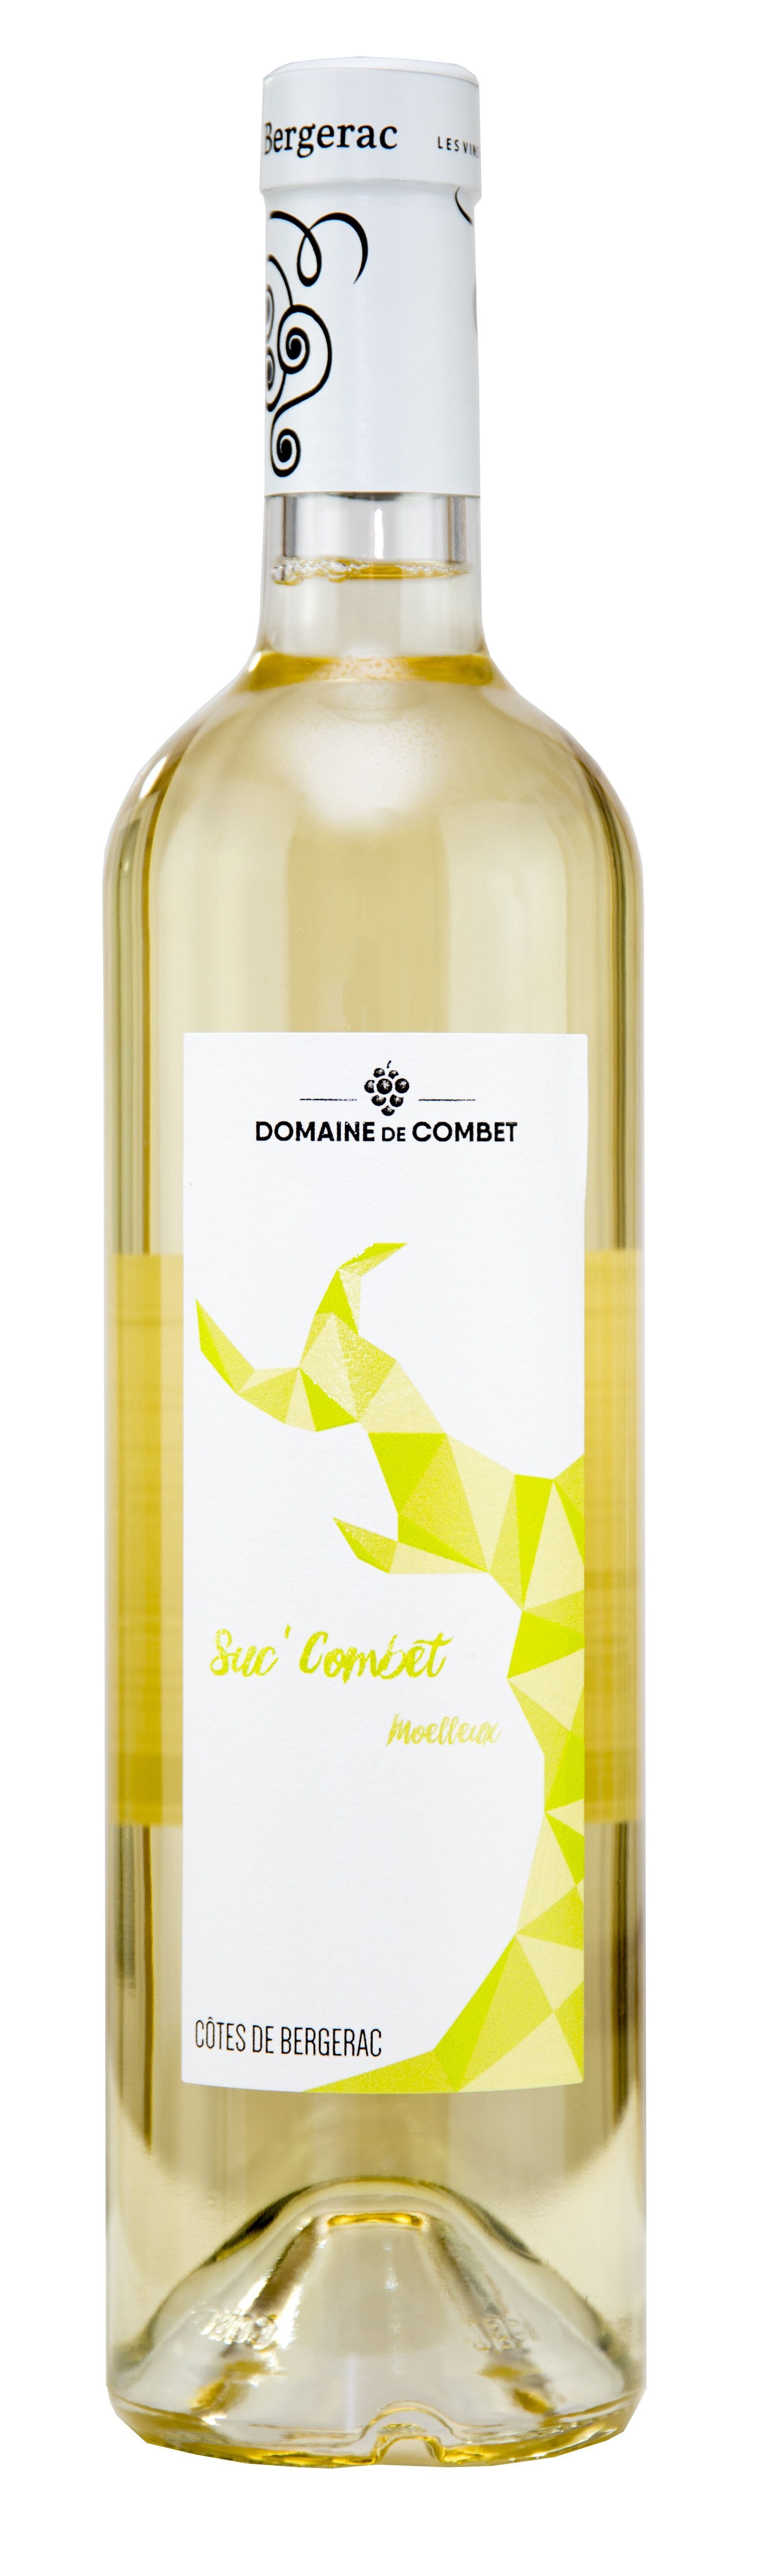 Earl de Combet SUC'COMBET, Blanco, 2021, Côtes de Bergerac. Bottle image